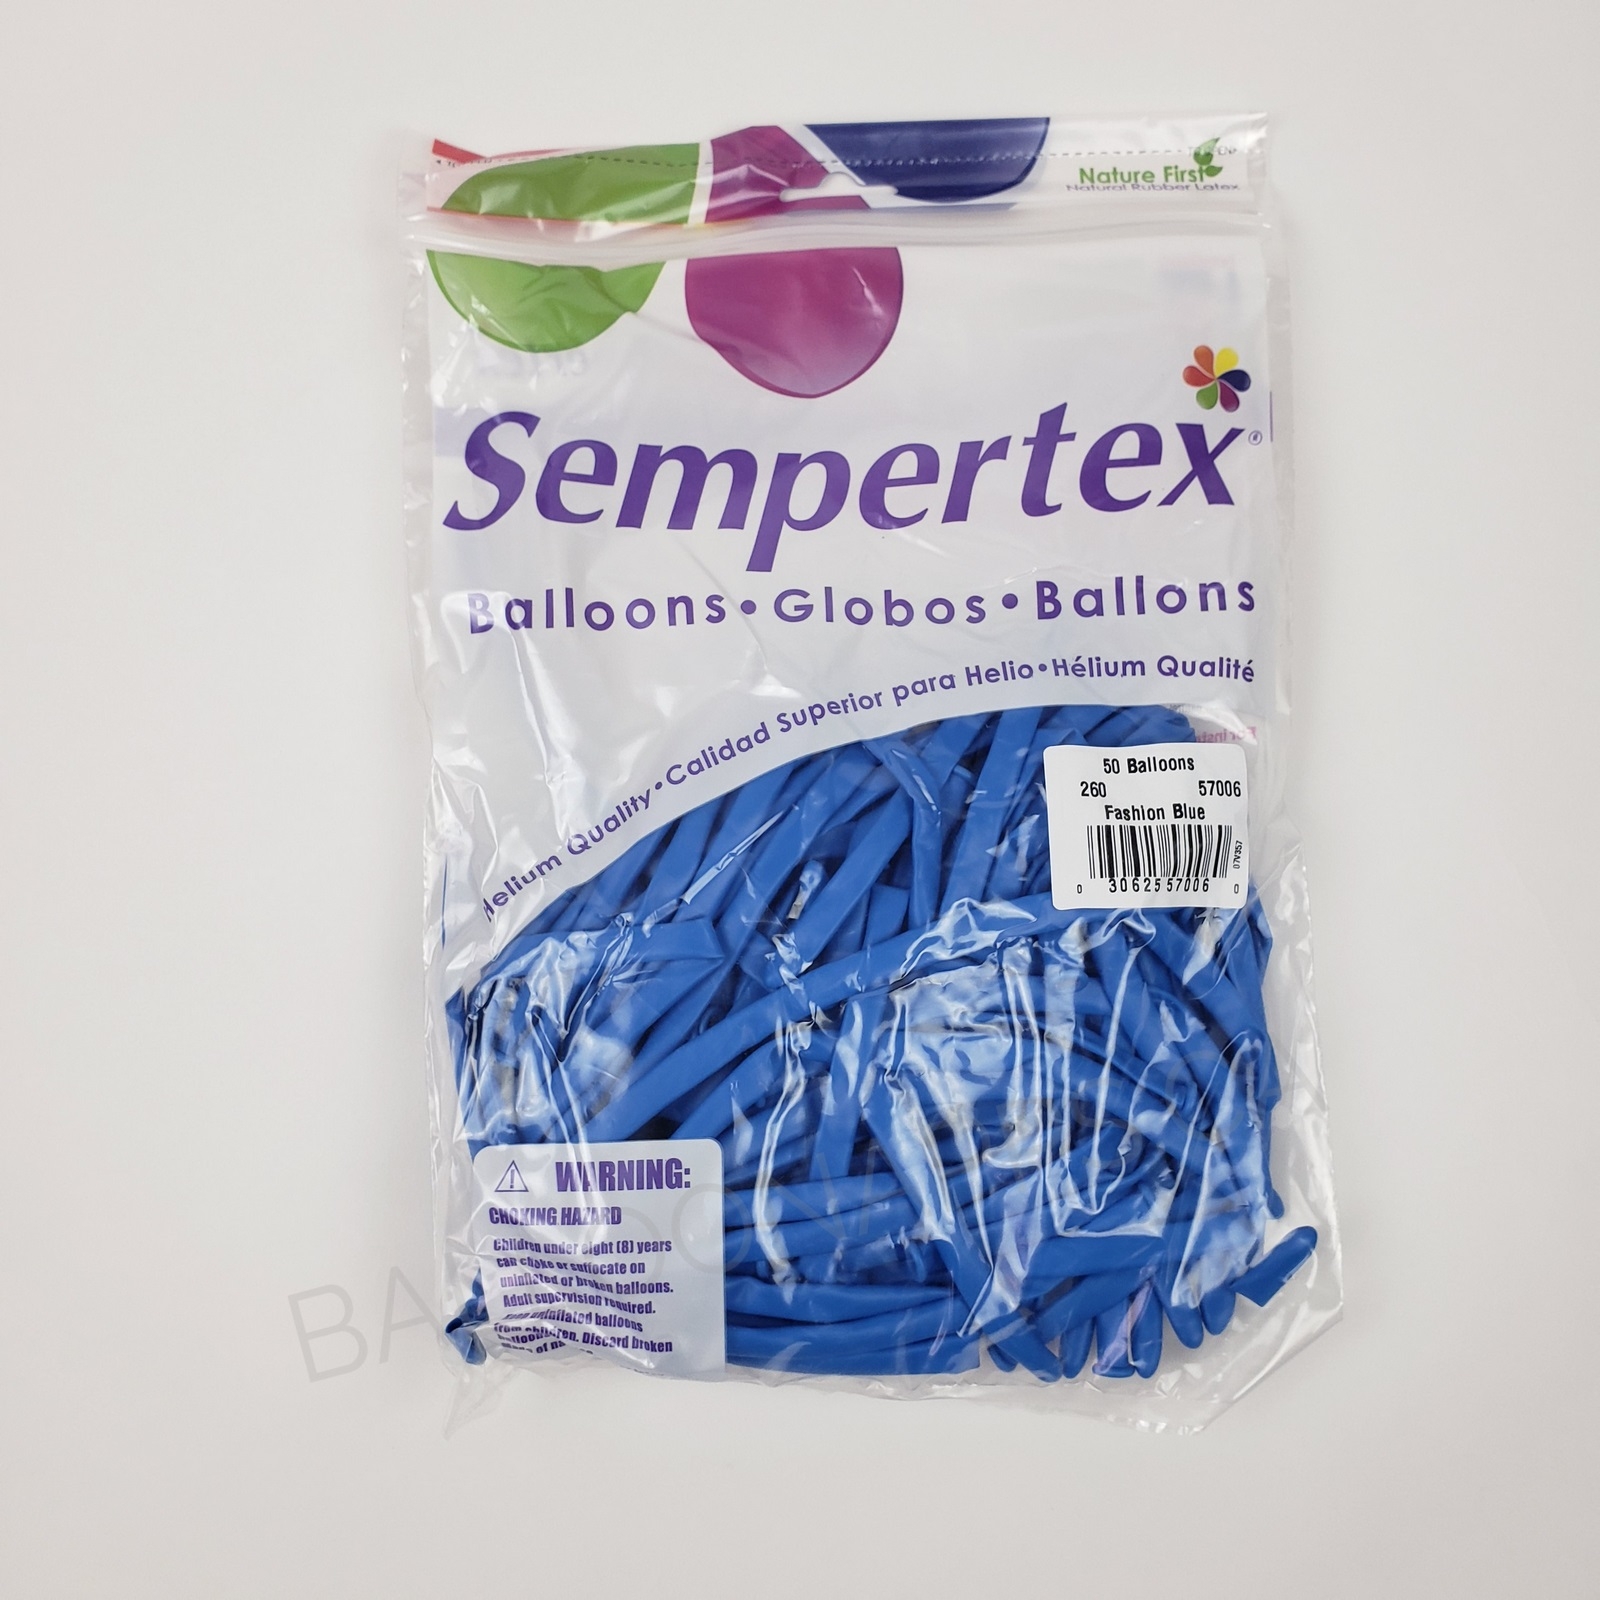 Sempertex 260 Blue